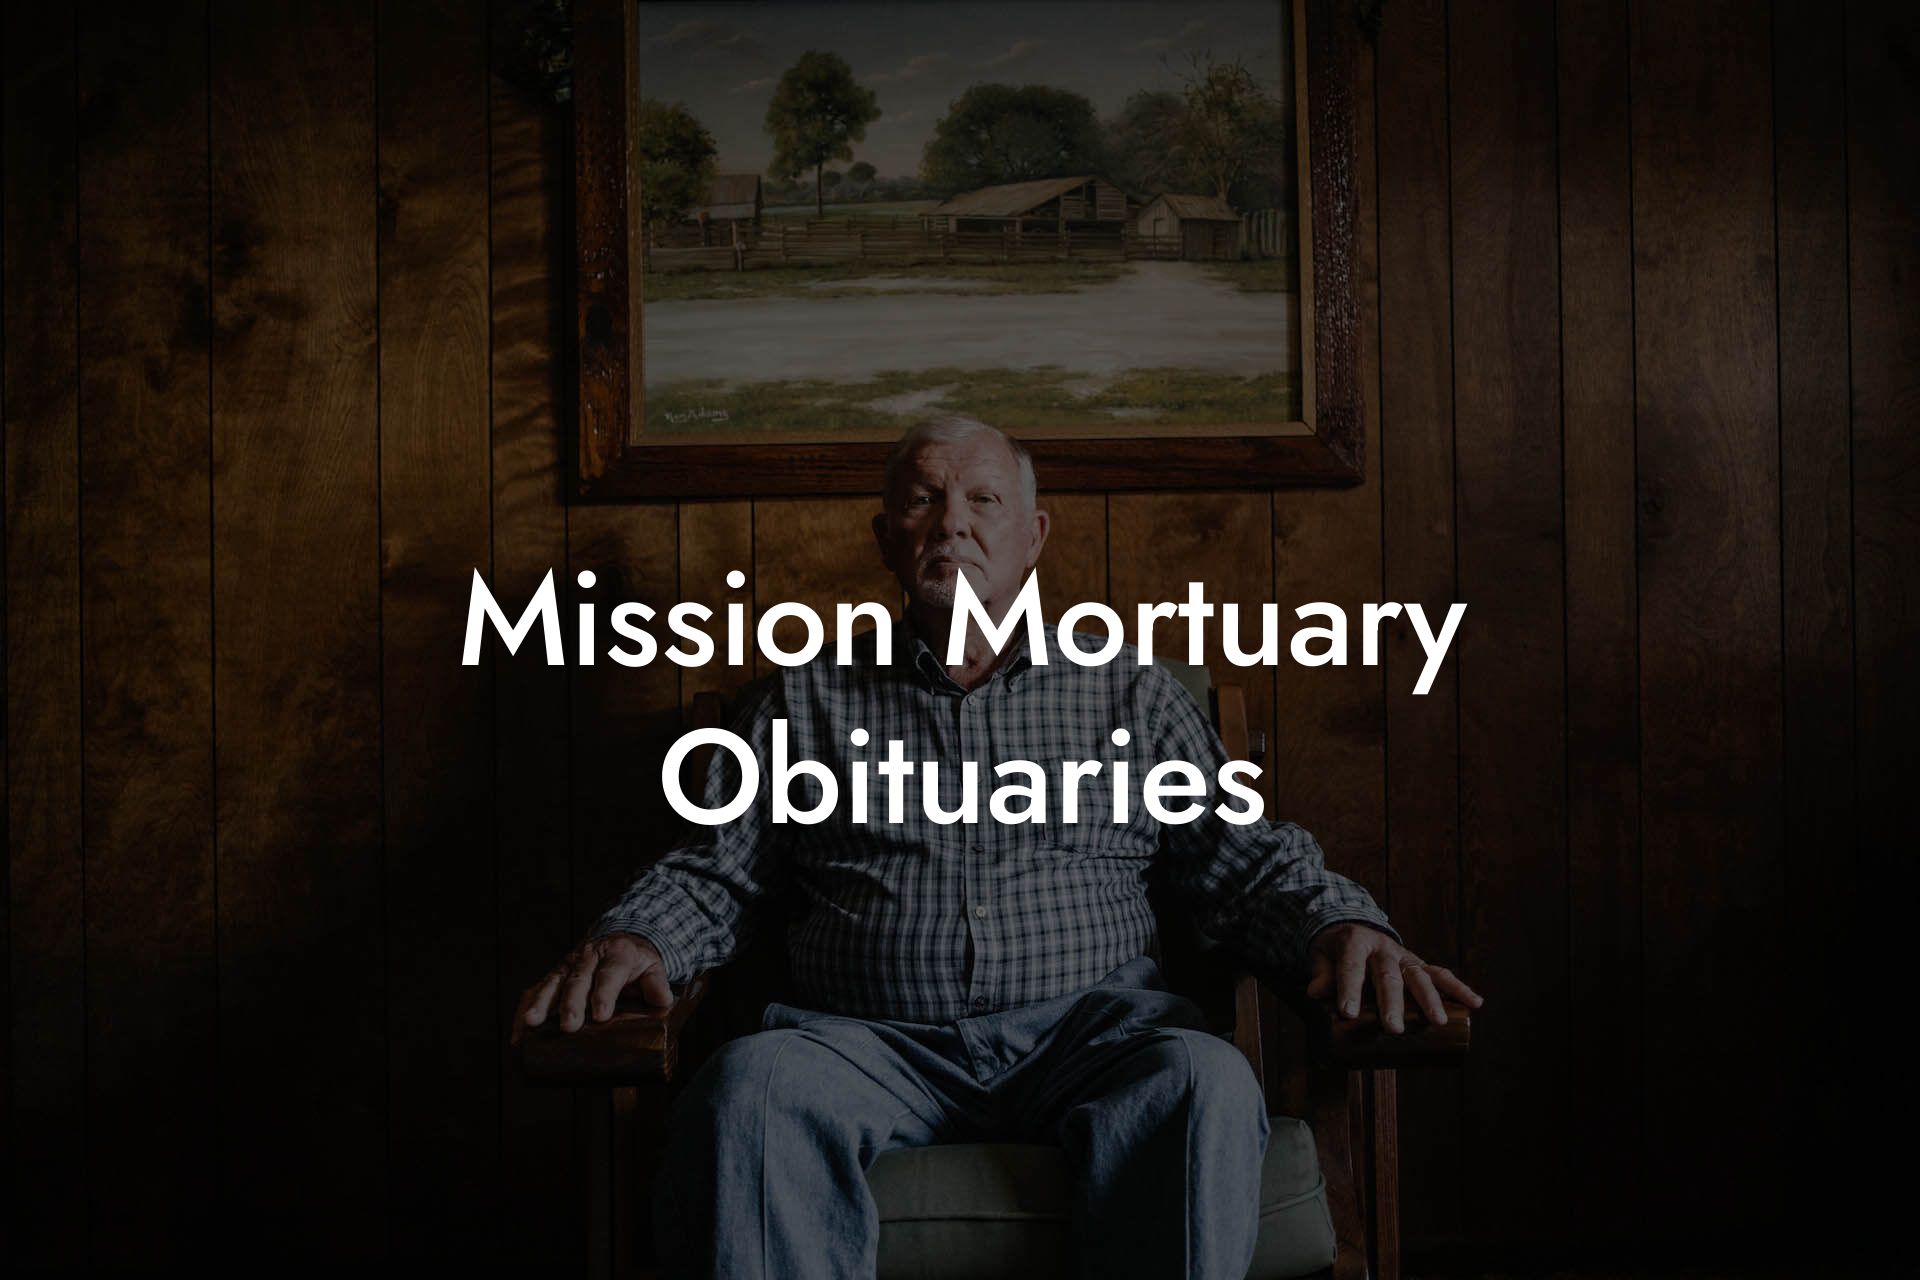 Mission Mortuary Obituaries